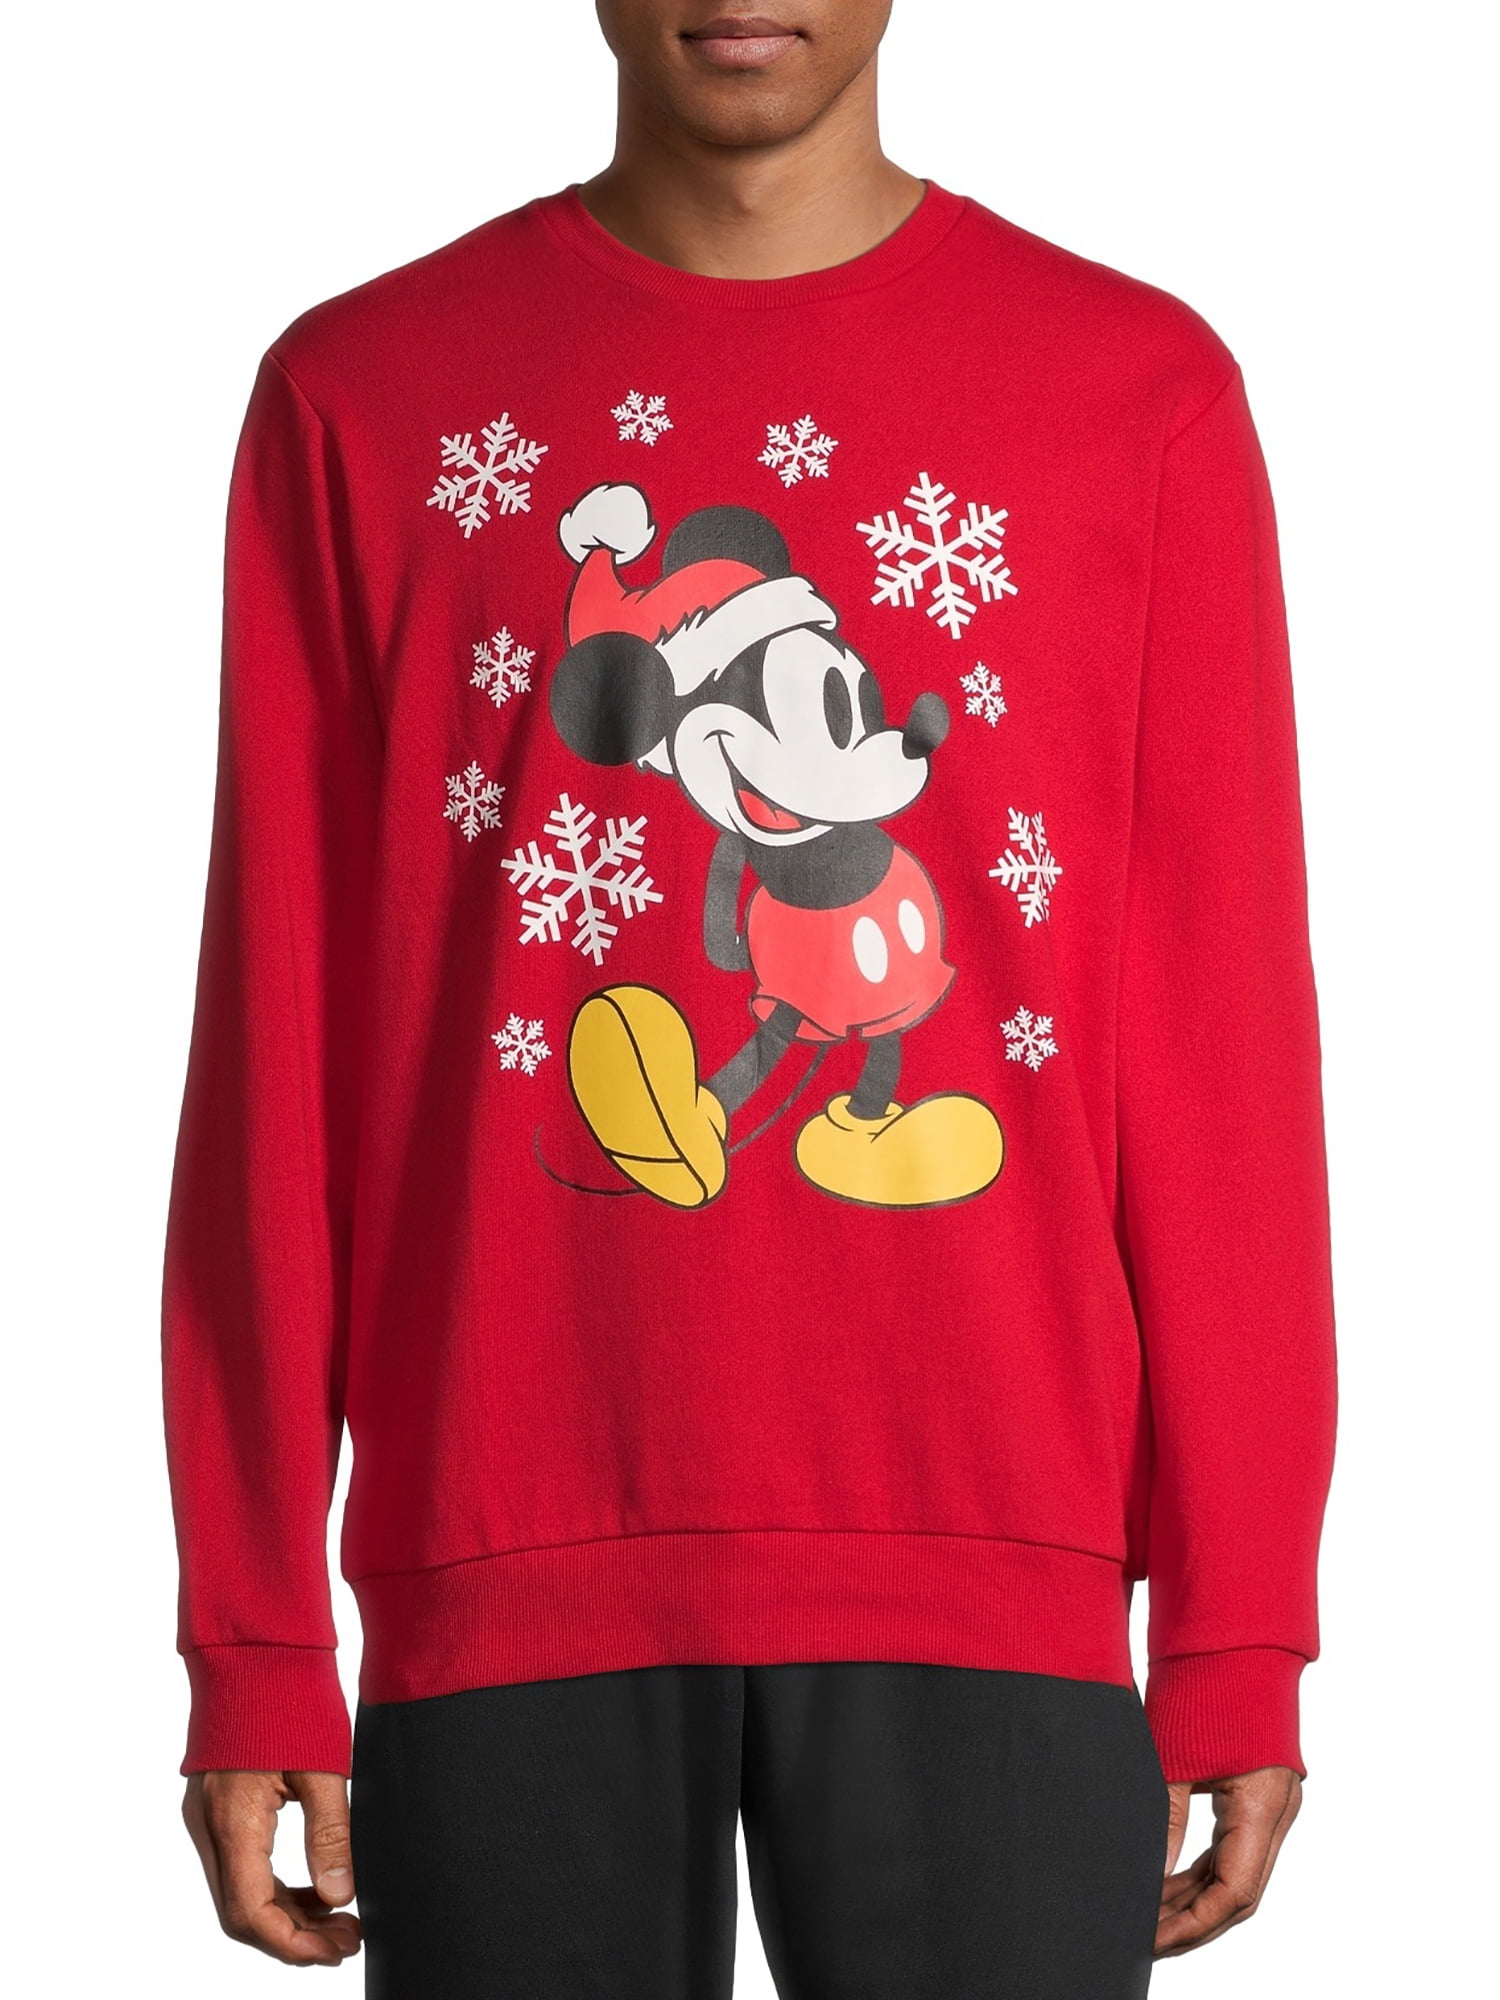 Disney Mickey Mouse Christmas Hohoho Tshirt Tshirt Oversized Gift Tshirt S-M-L-XL-XXL-3XL-4XL-5XL Vest Tank Top Men Women Unisex 4220